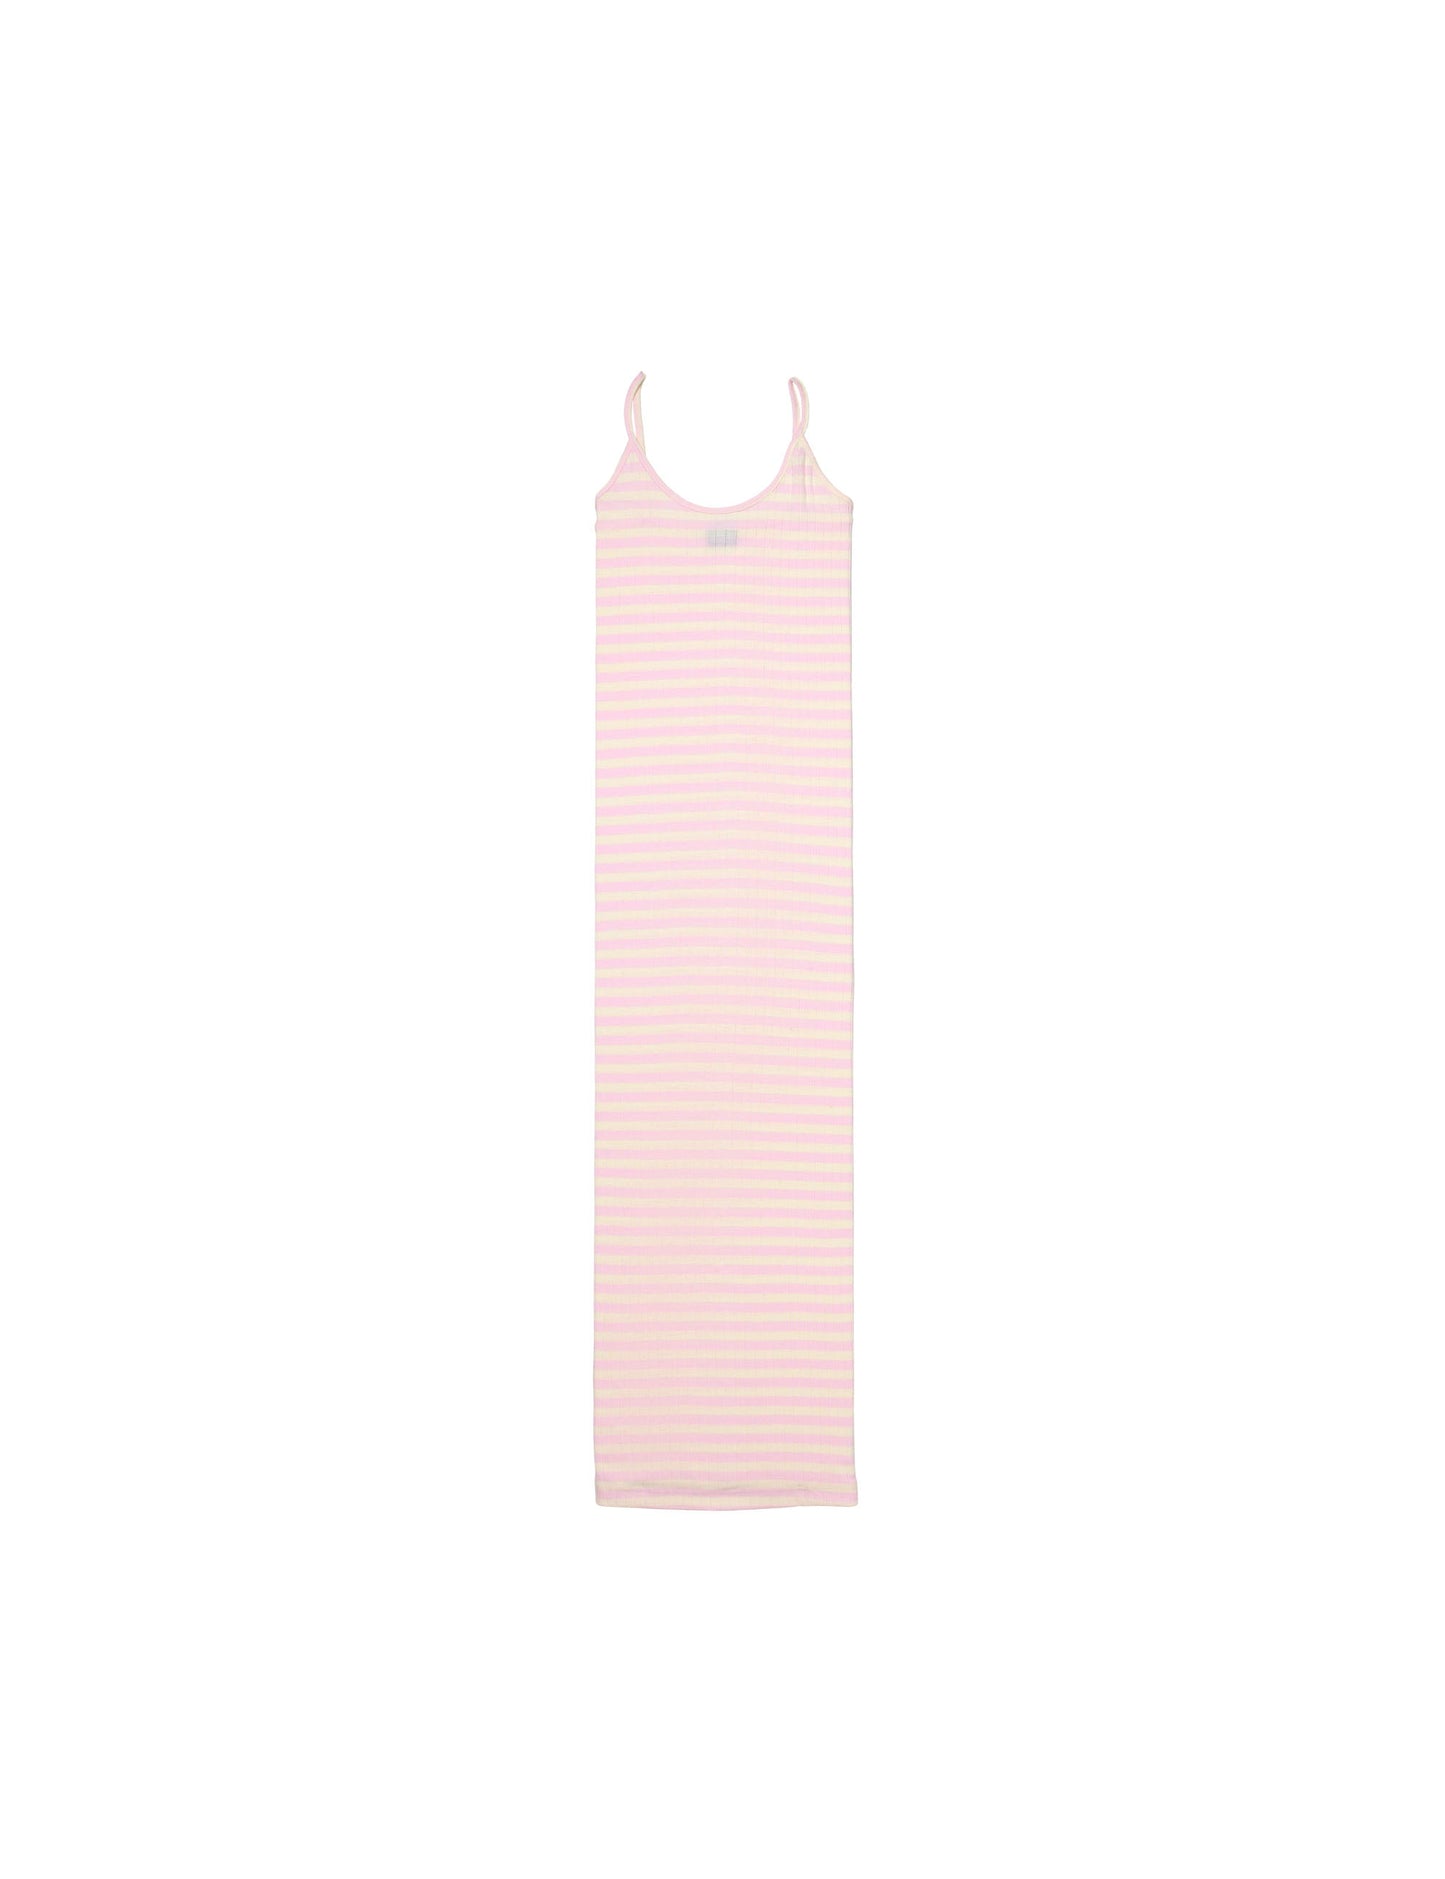 NPS Broadway Strap Dress,  Light Pink/Ecru